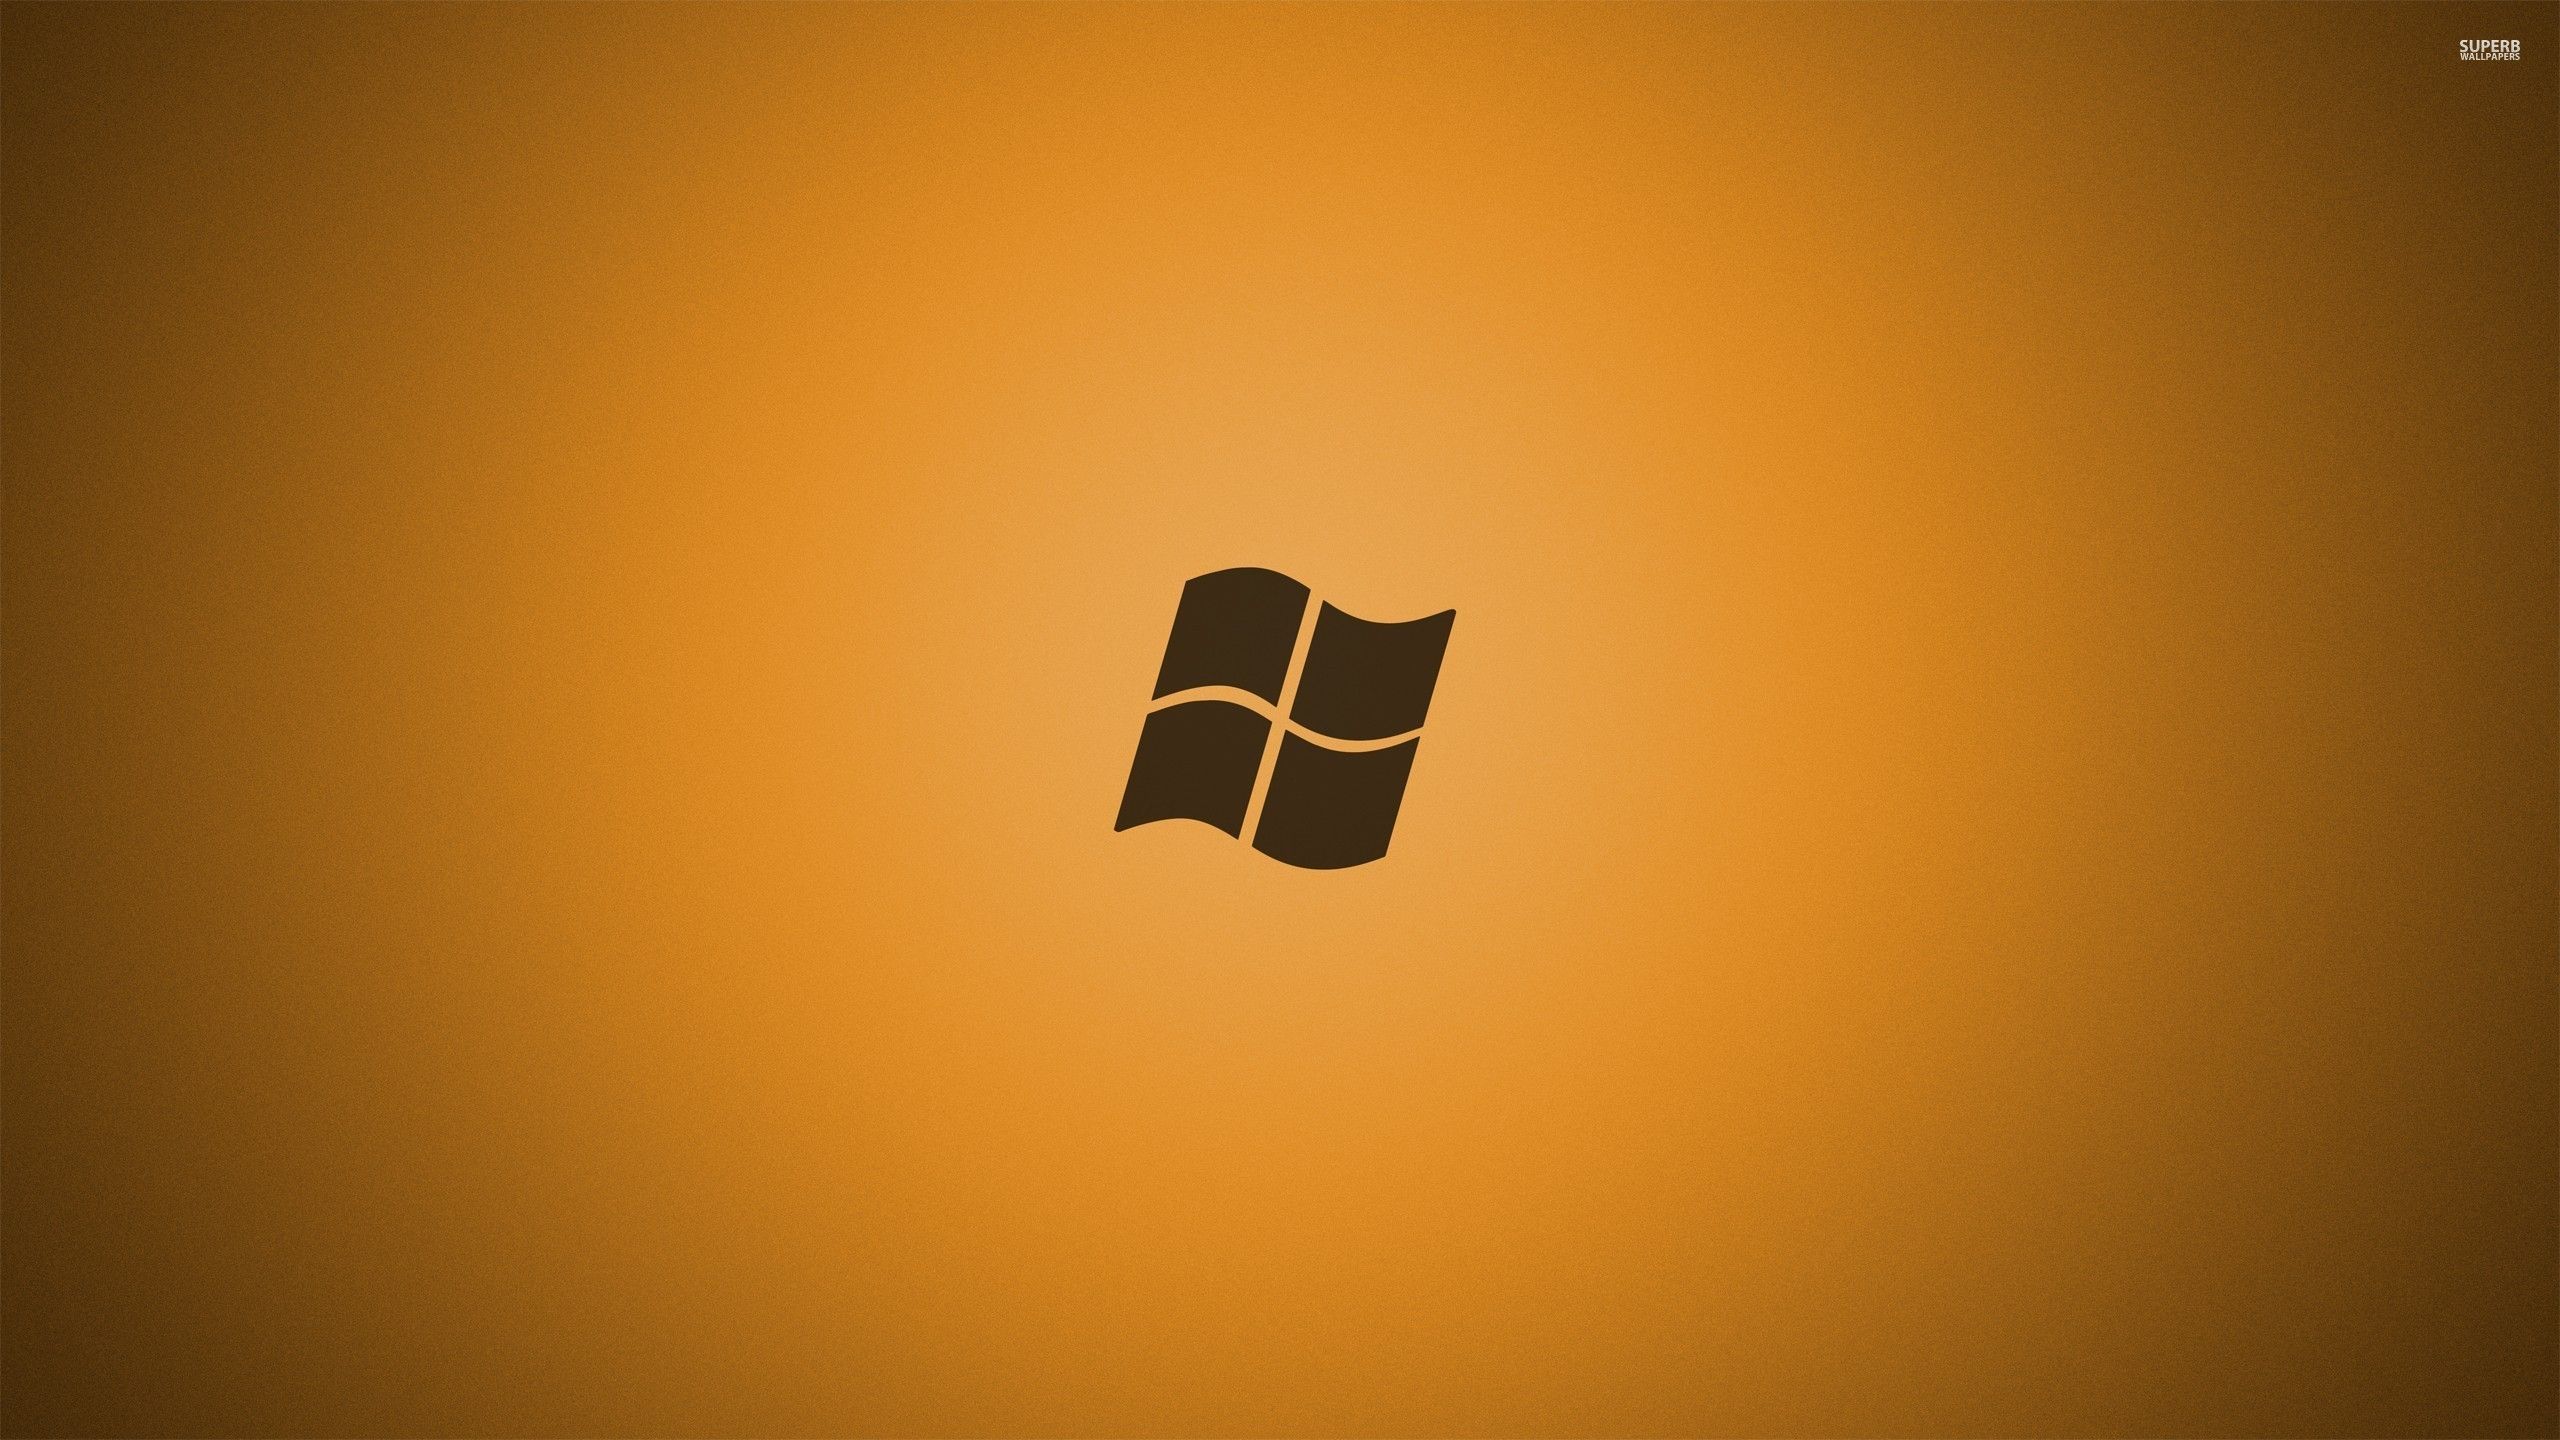 Windows 7 logo on golden background 51081 2560x1440